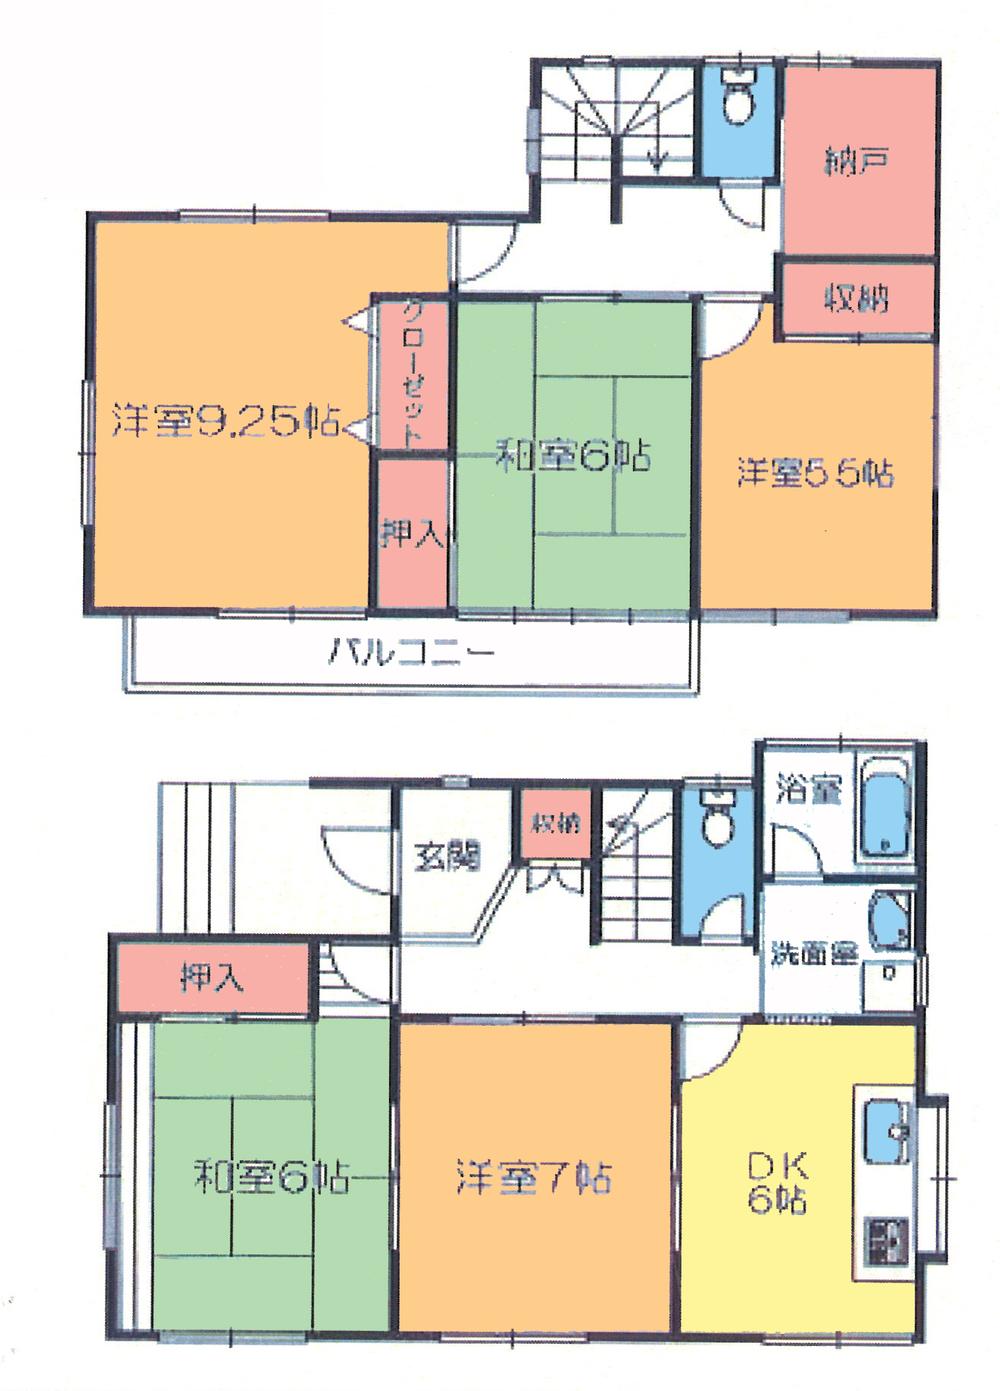 Floor plan. 15.5 million yen, 5DK, Land area 174.3 sq m , Building area 104.74 sq m floor plan